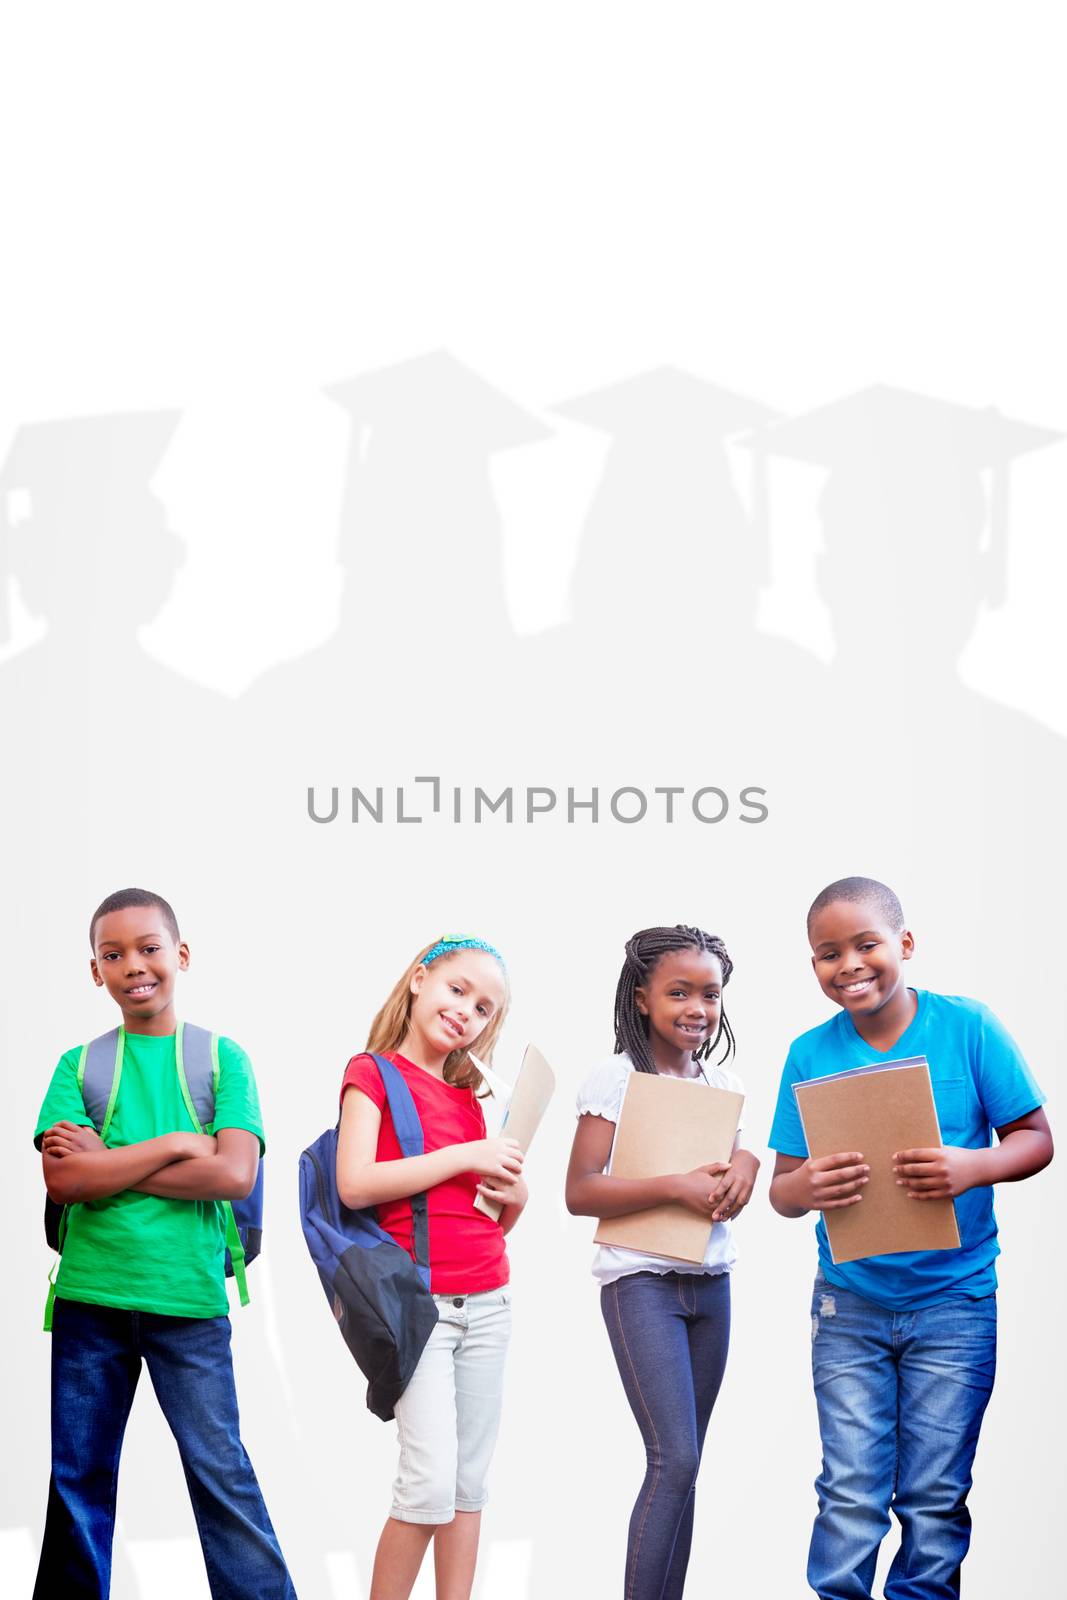 Cute pupils smiling at camera  against silhouette of graduate